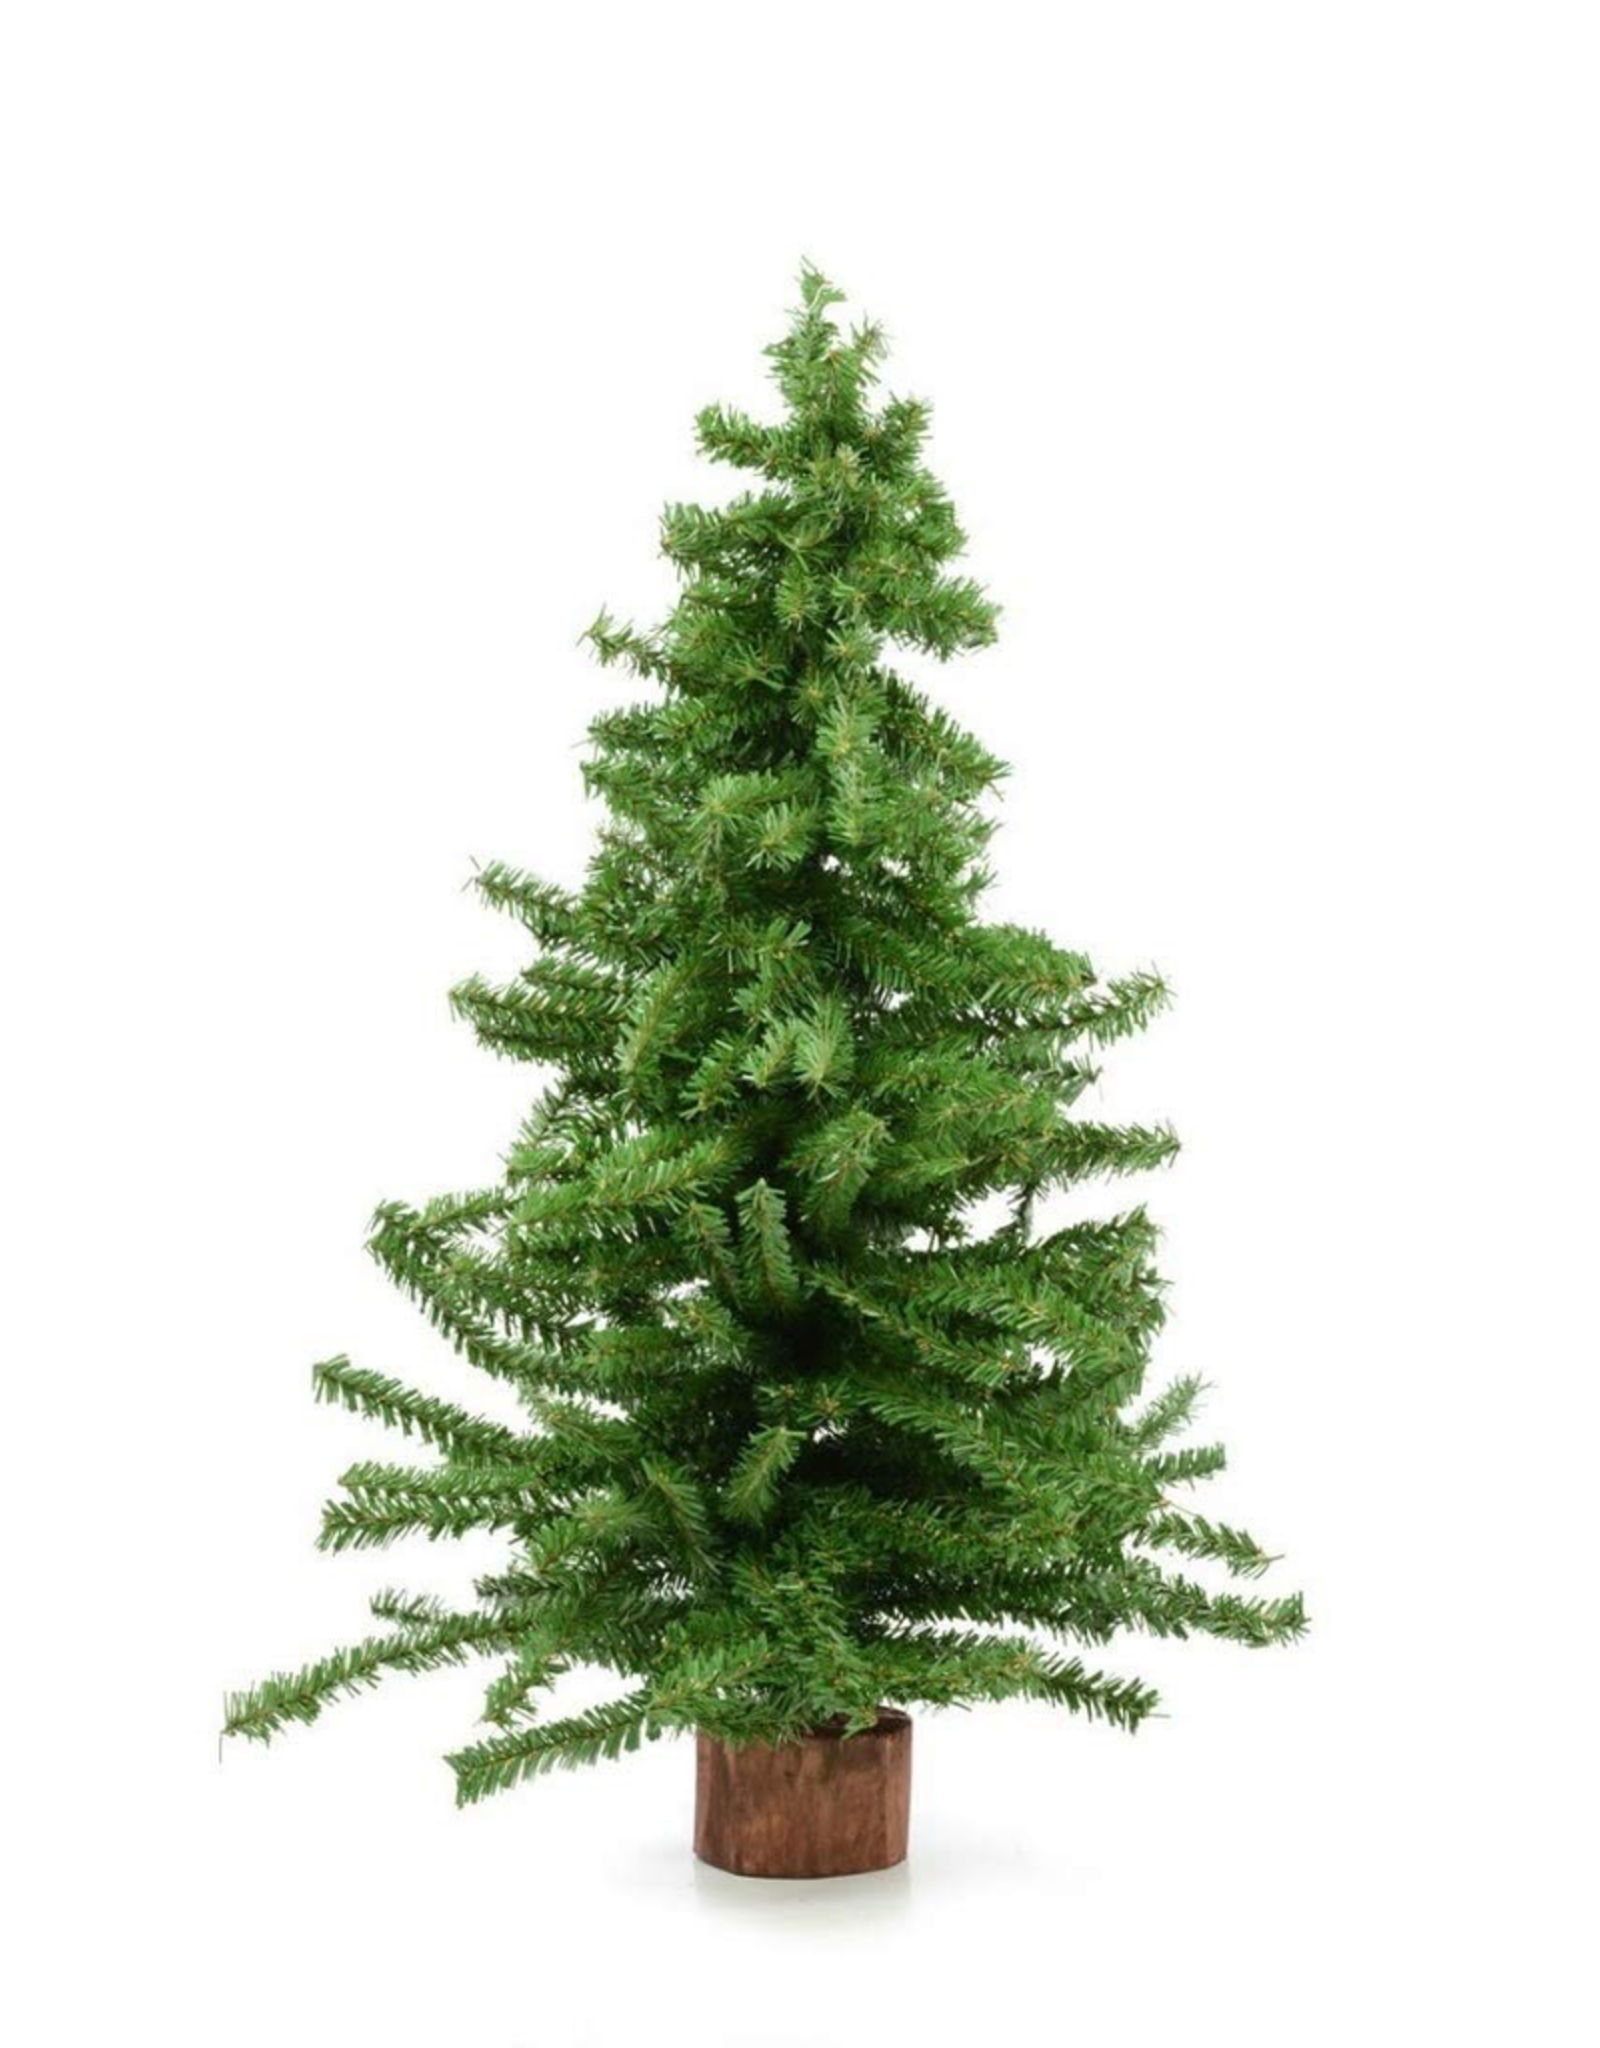 Kurt Adler Christmas Tree 24 inch Mini Pine w Round Wooden Base in Burlap